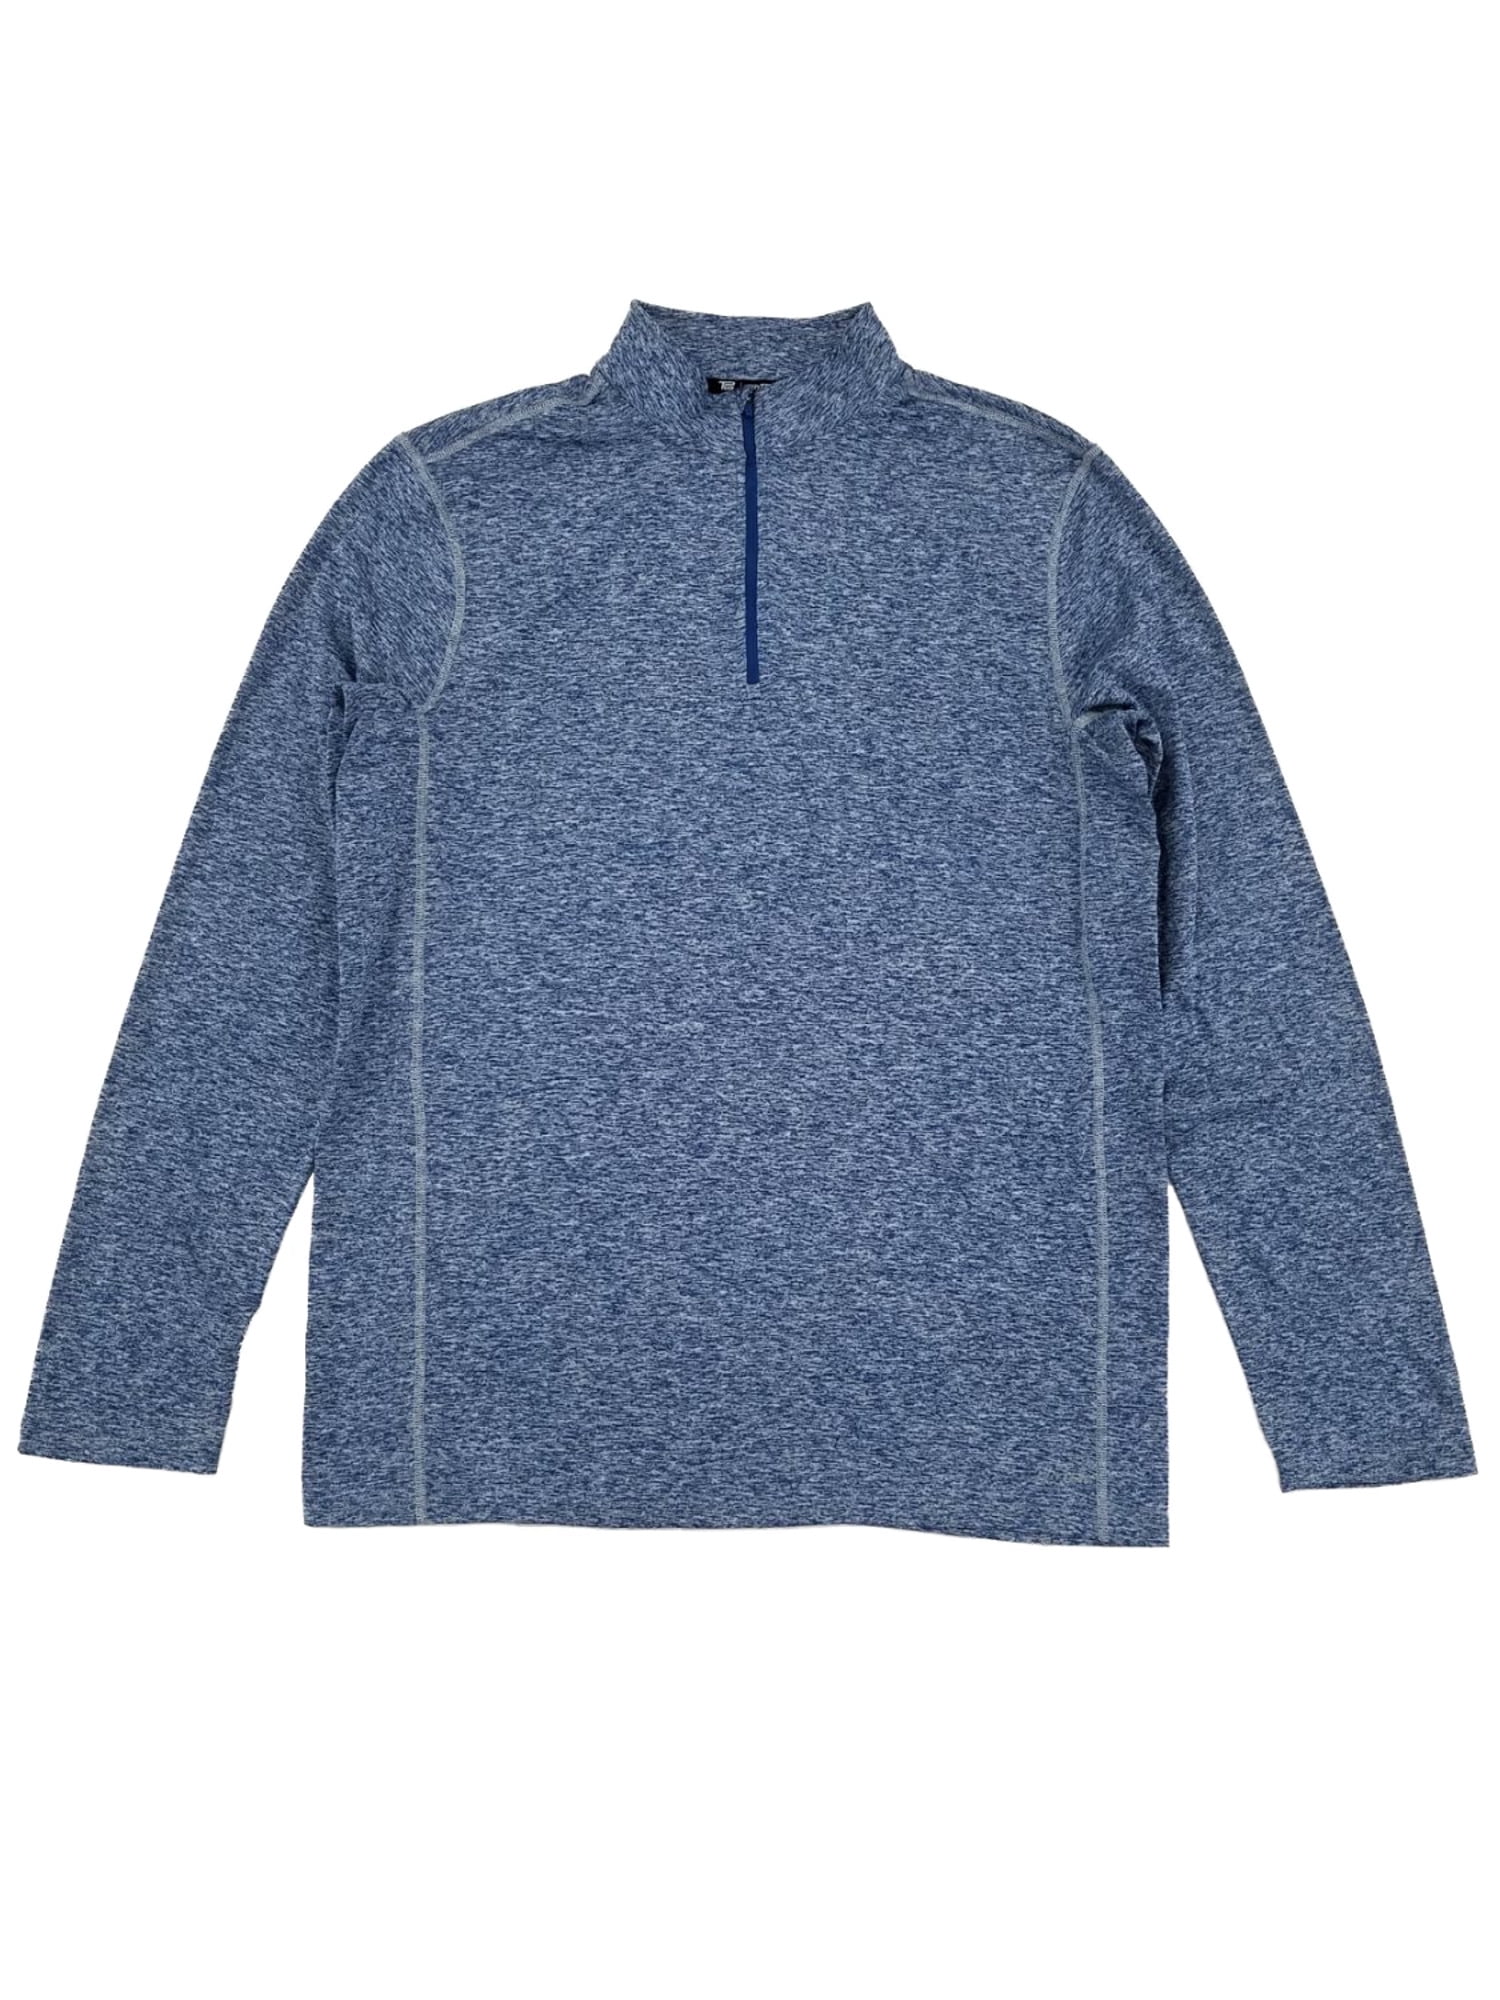 Tek Gear Mens Big & Tall Heather Blue DryTek 1/4 Zip Pullover Sweatshirt 